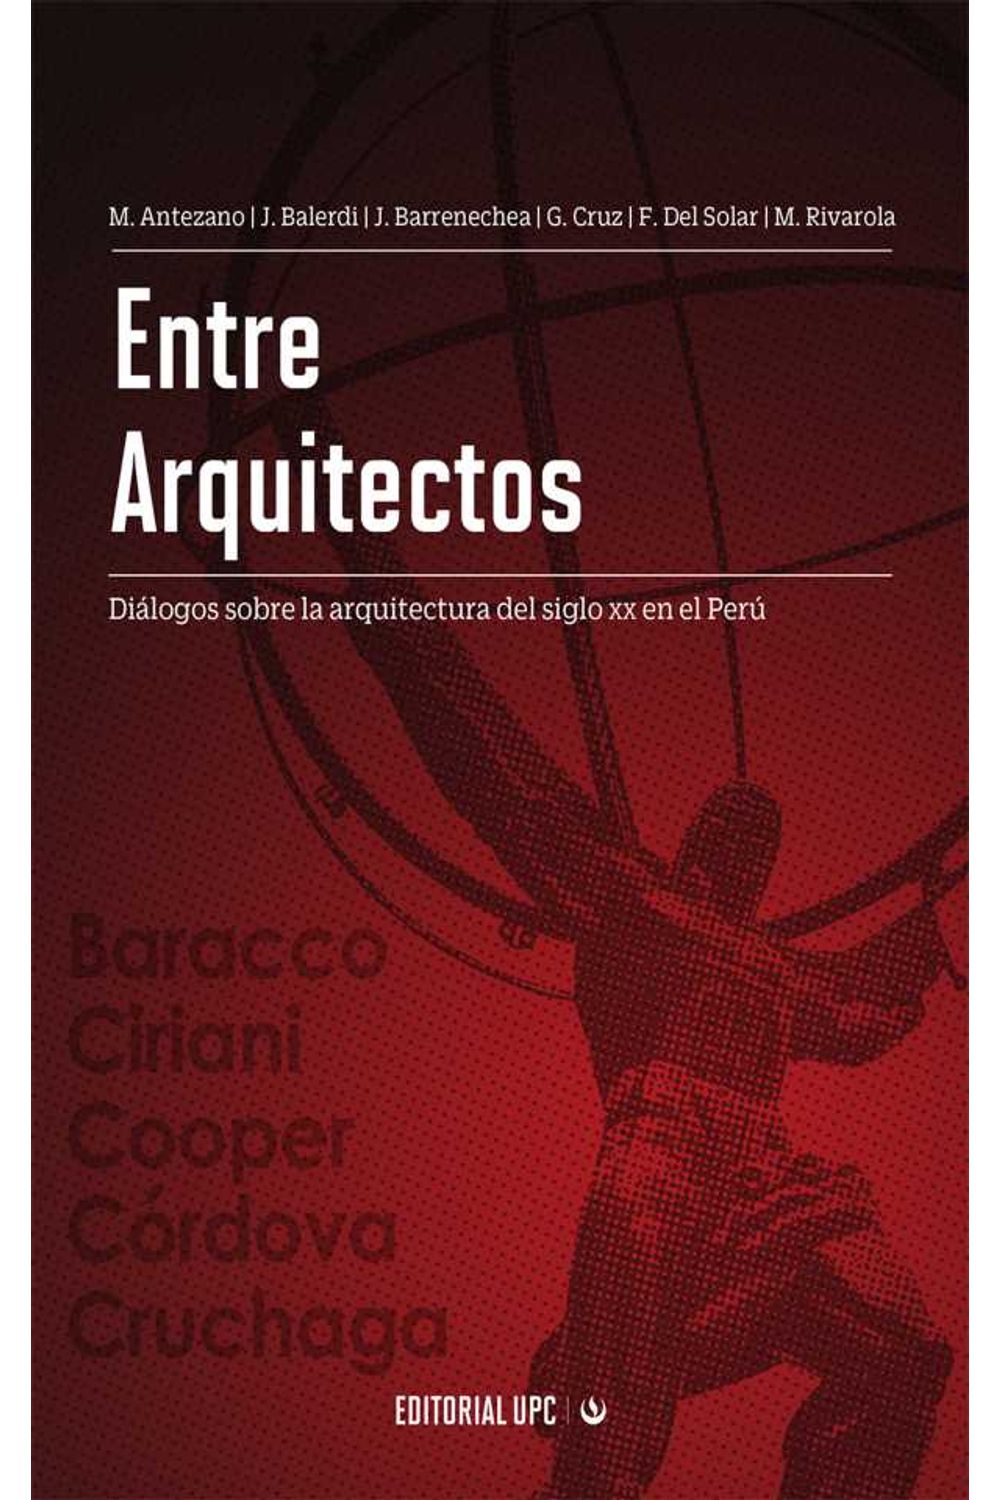 bw-entre-arquitectos-editorial-upc-9786123182731